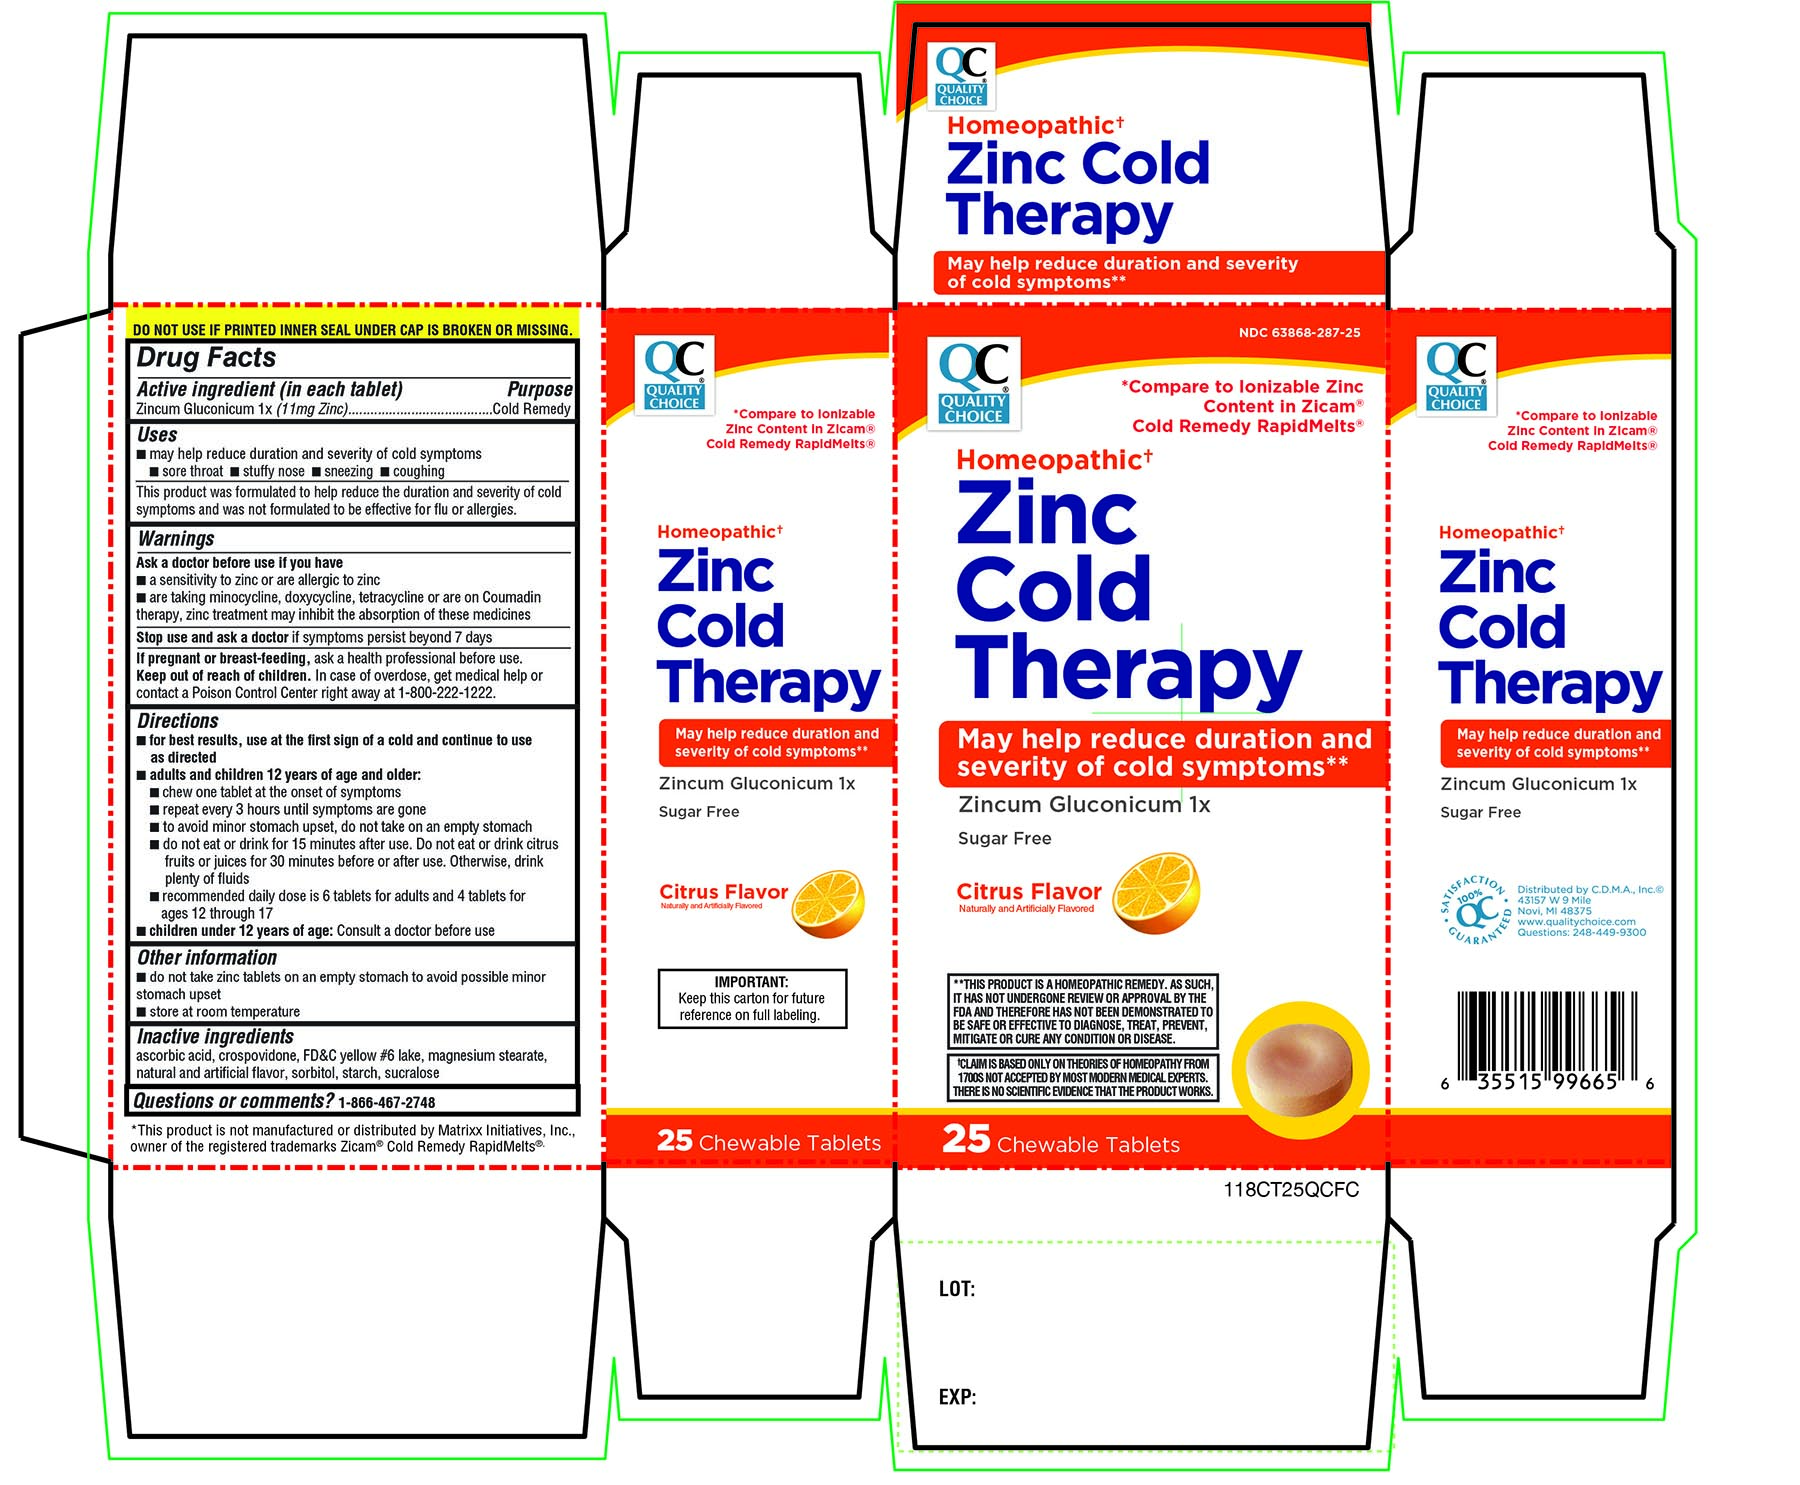 Quality Choice Zinc Cold Therapy Citrus Flavor 25 Chewable Tablets